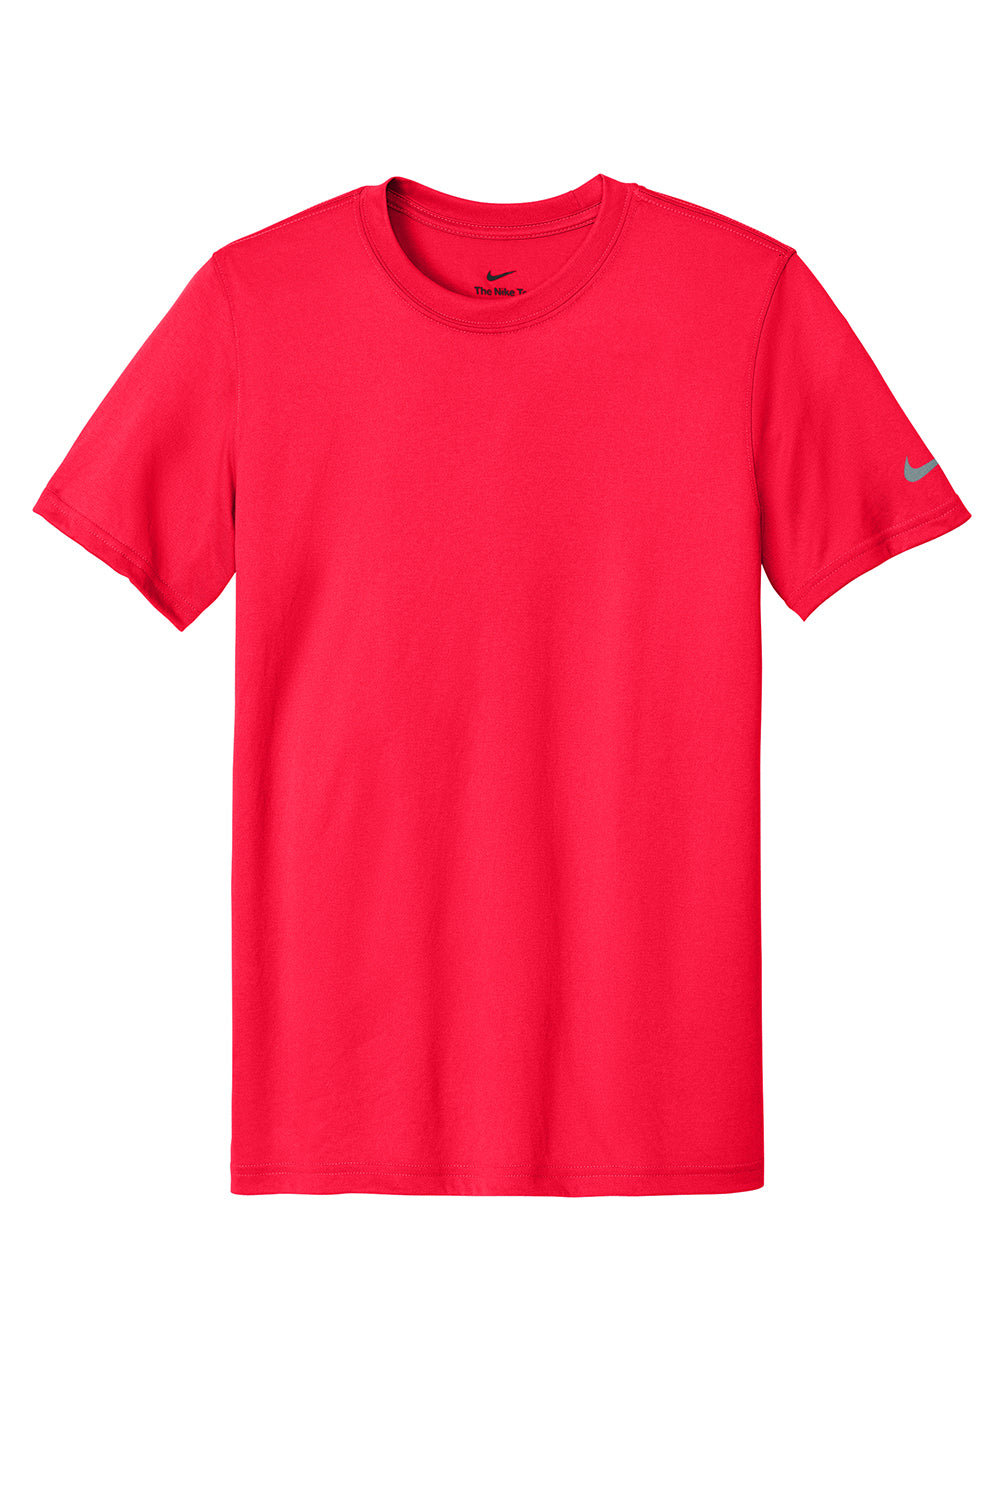 Nike NKDX8730 Mens rLegend Dri-Fit Moisture Wicking Short Sleeve Crewneck T-Shirt University Red Flat Front